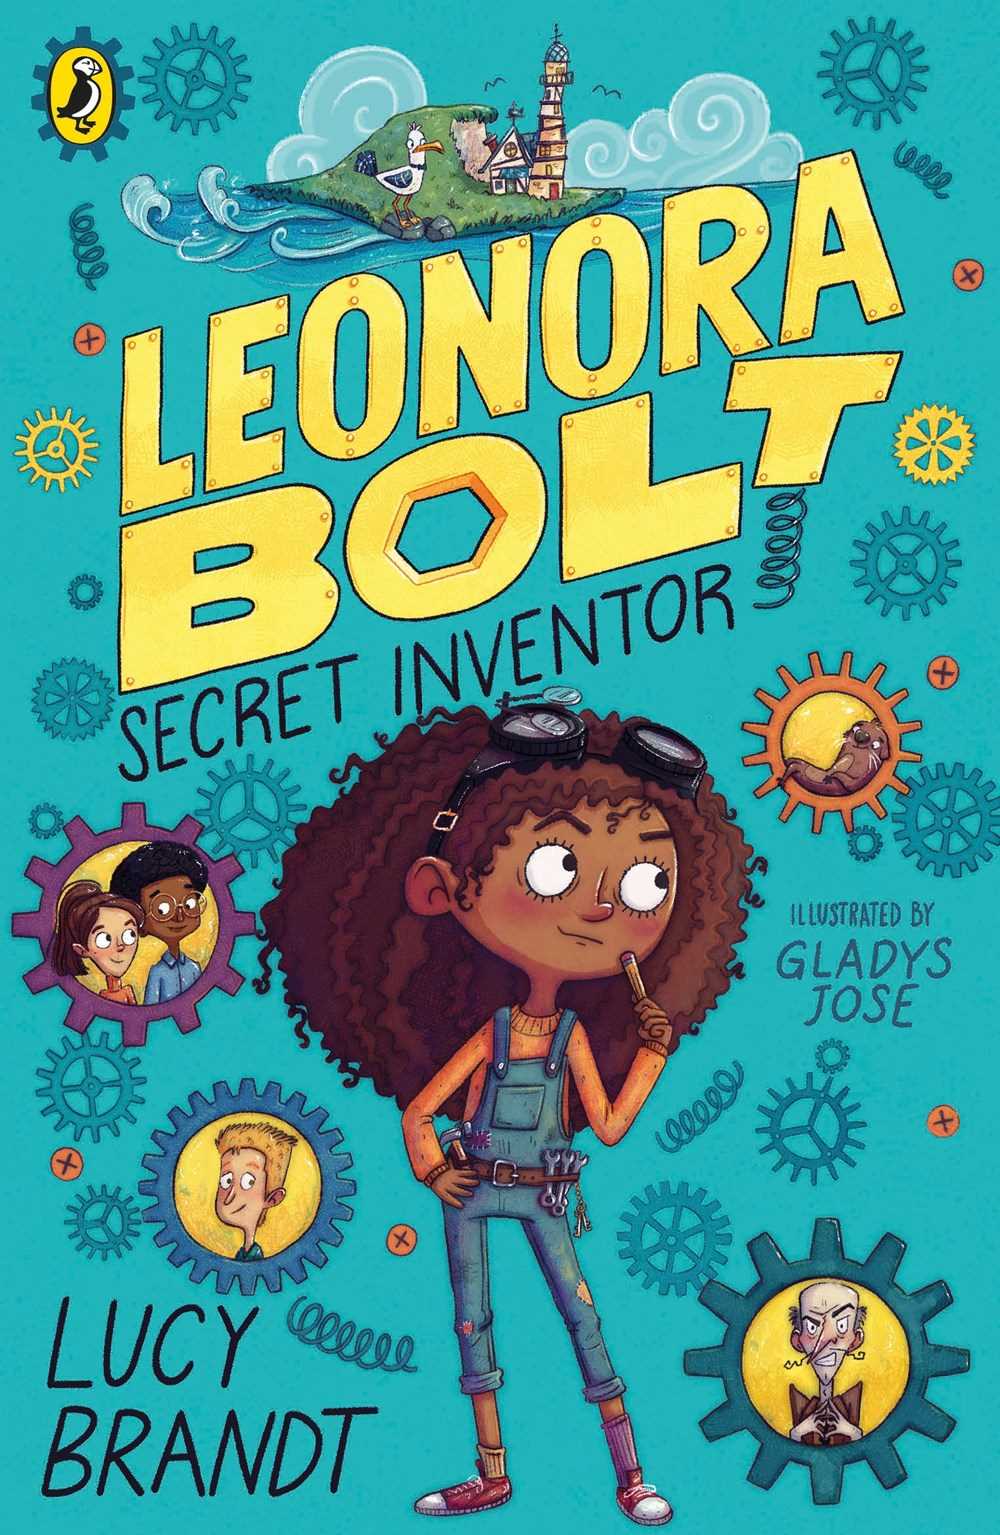 Secret Inventor (Leonora Bolt)